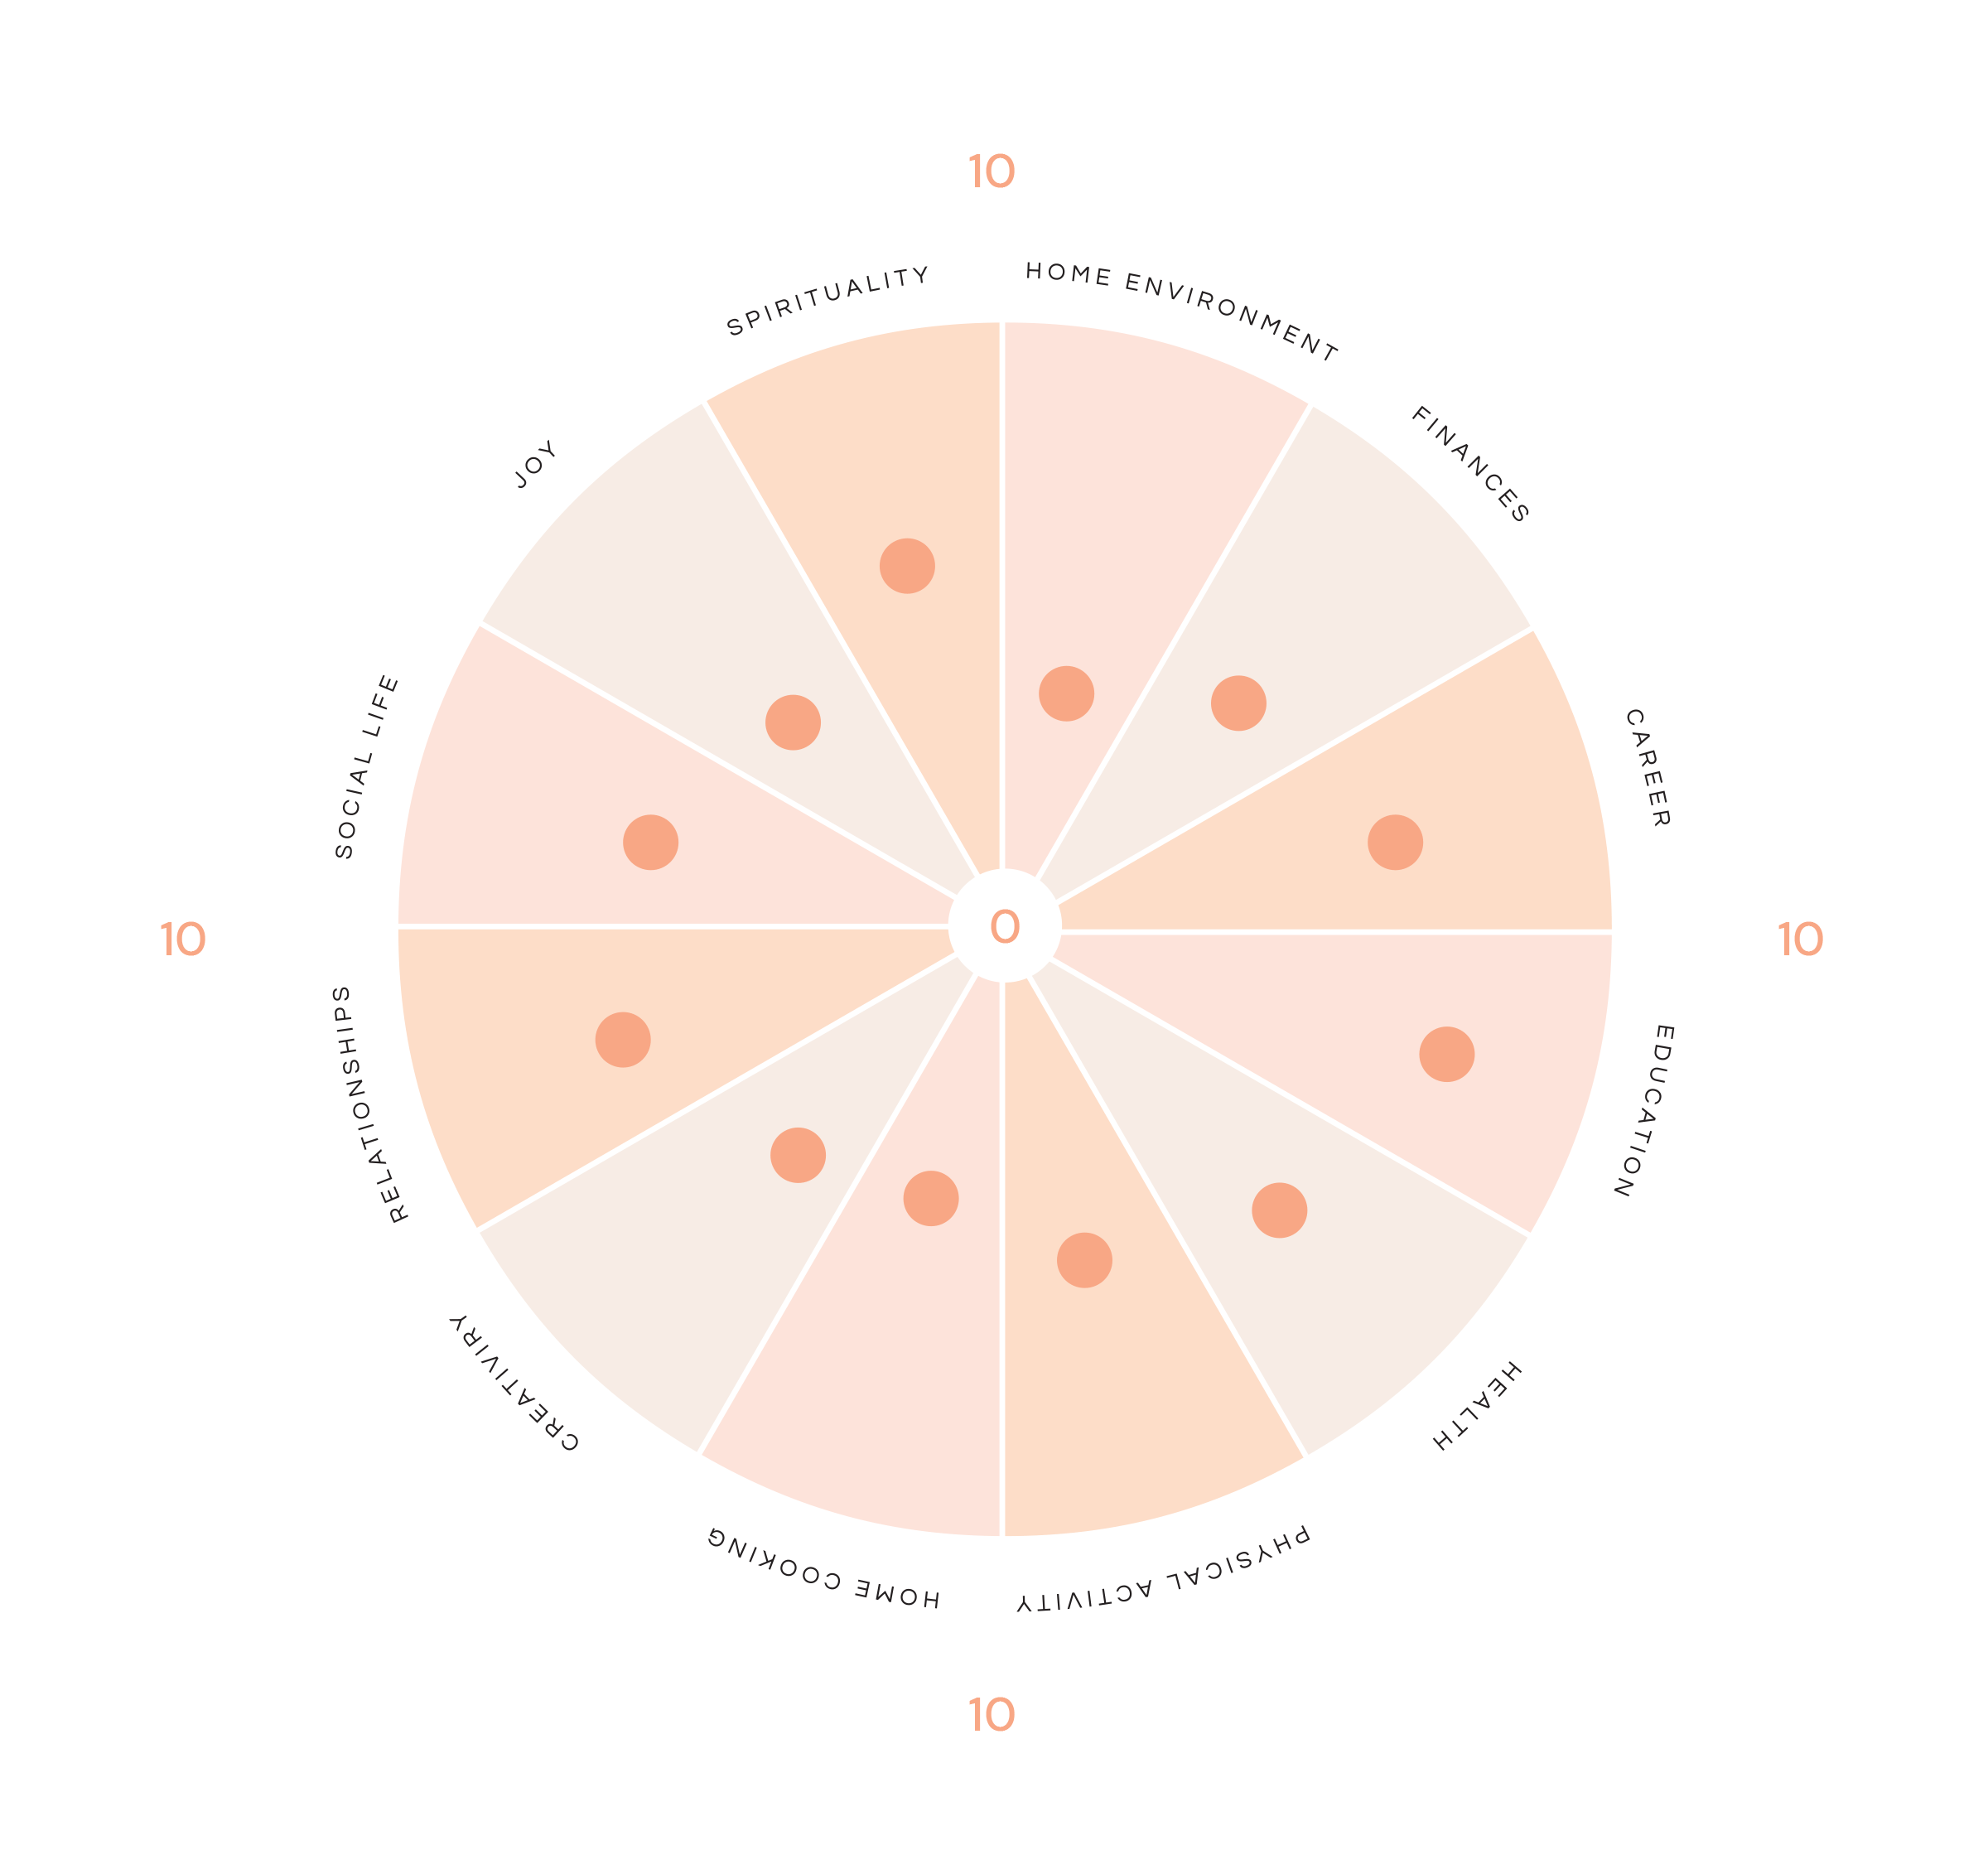 Animation of Circle of Life Analysis Wheel